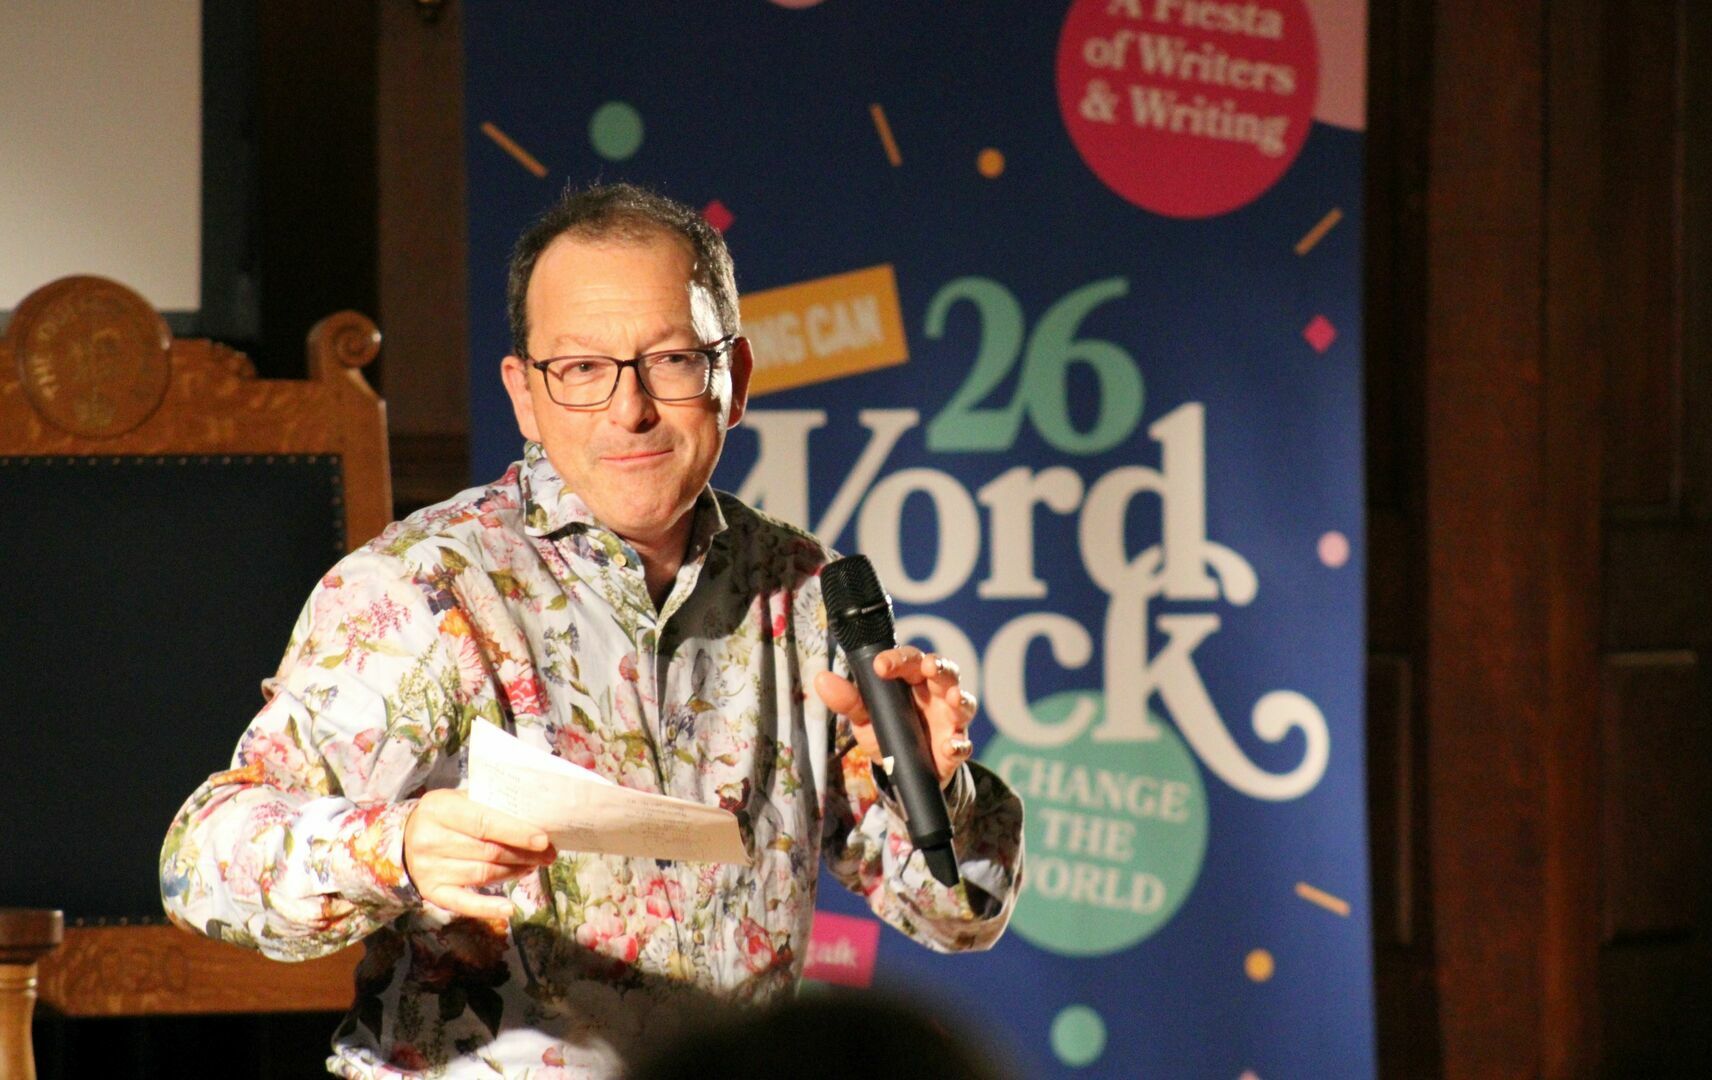 26 Wordstock @ the Bloomsbury Festival (Saturday 21 October @ Conway Hall, London), London, United Kingdom